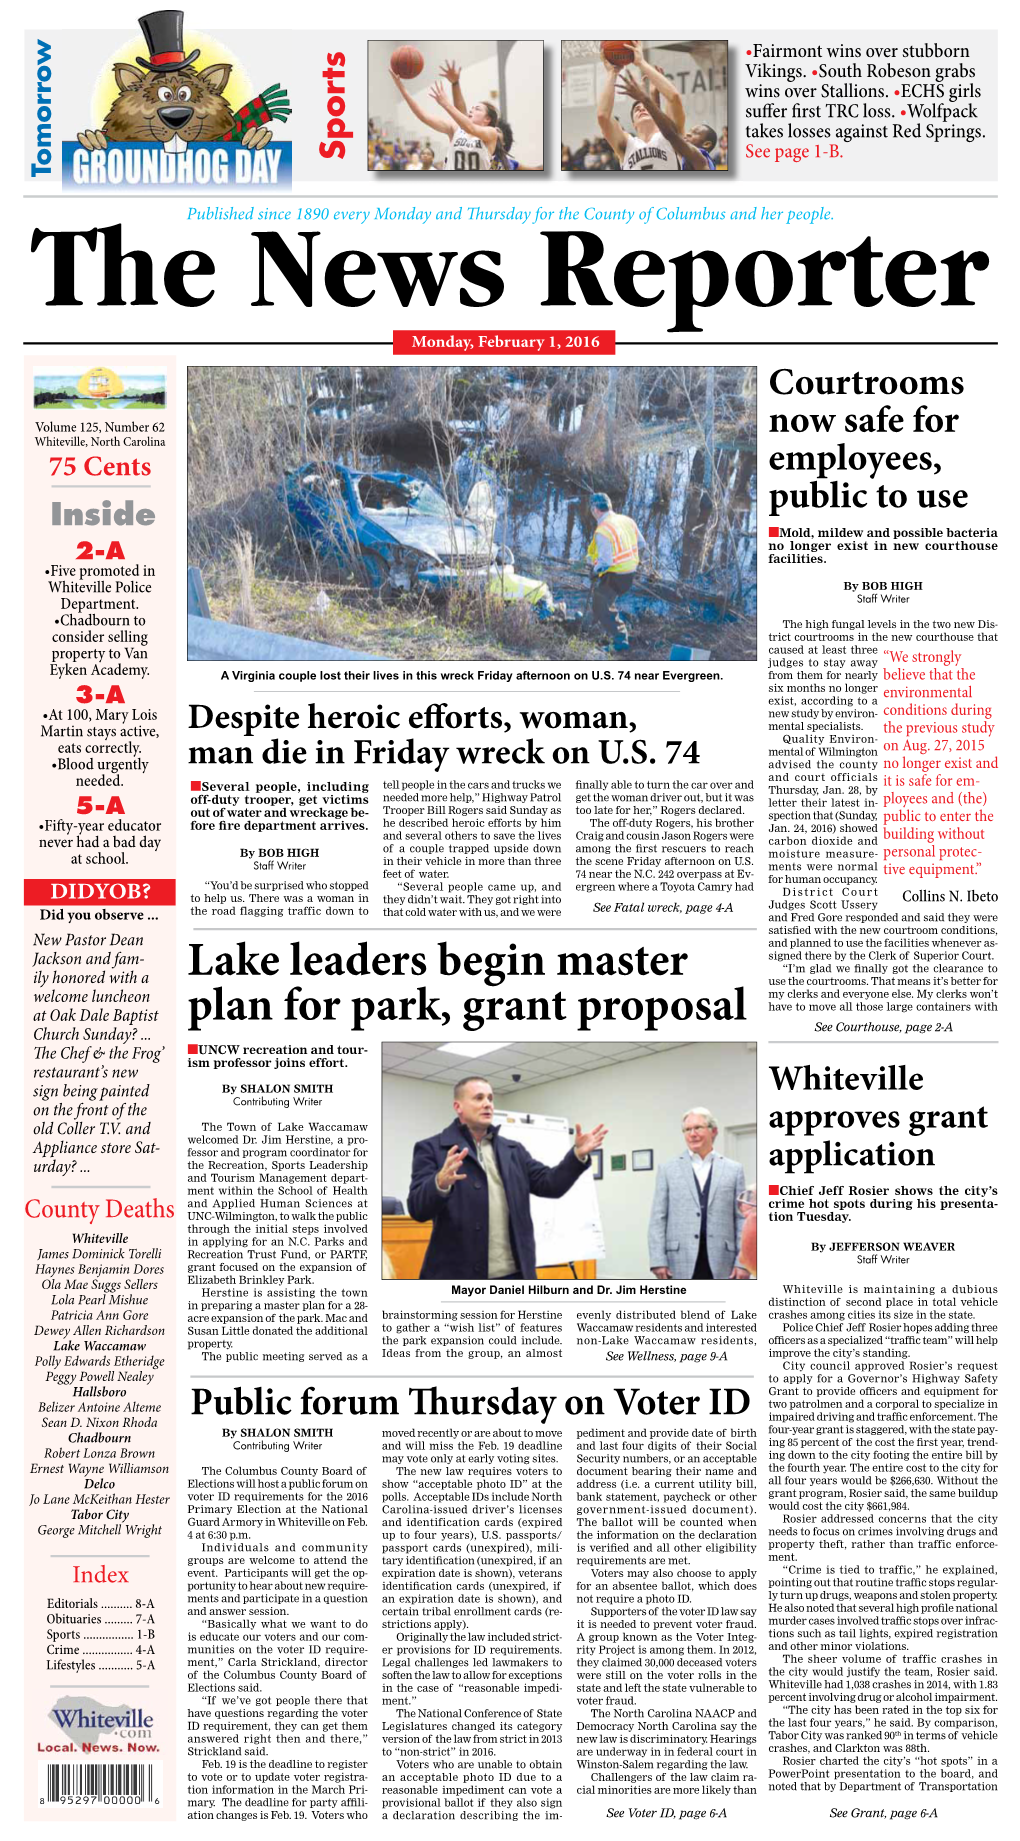 Lake Leaders Begin Master Plan for Park, Grant Proposal